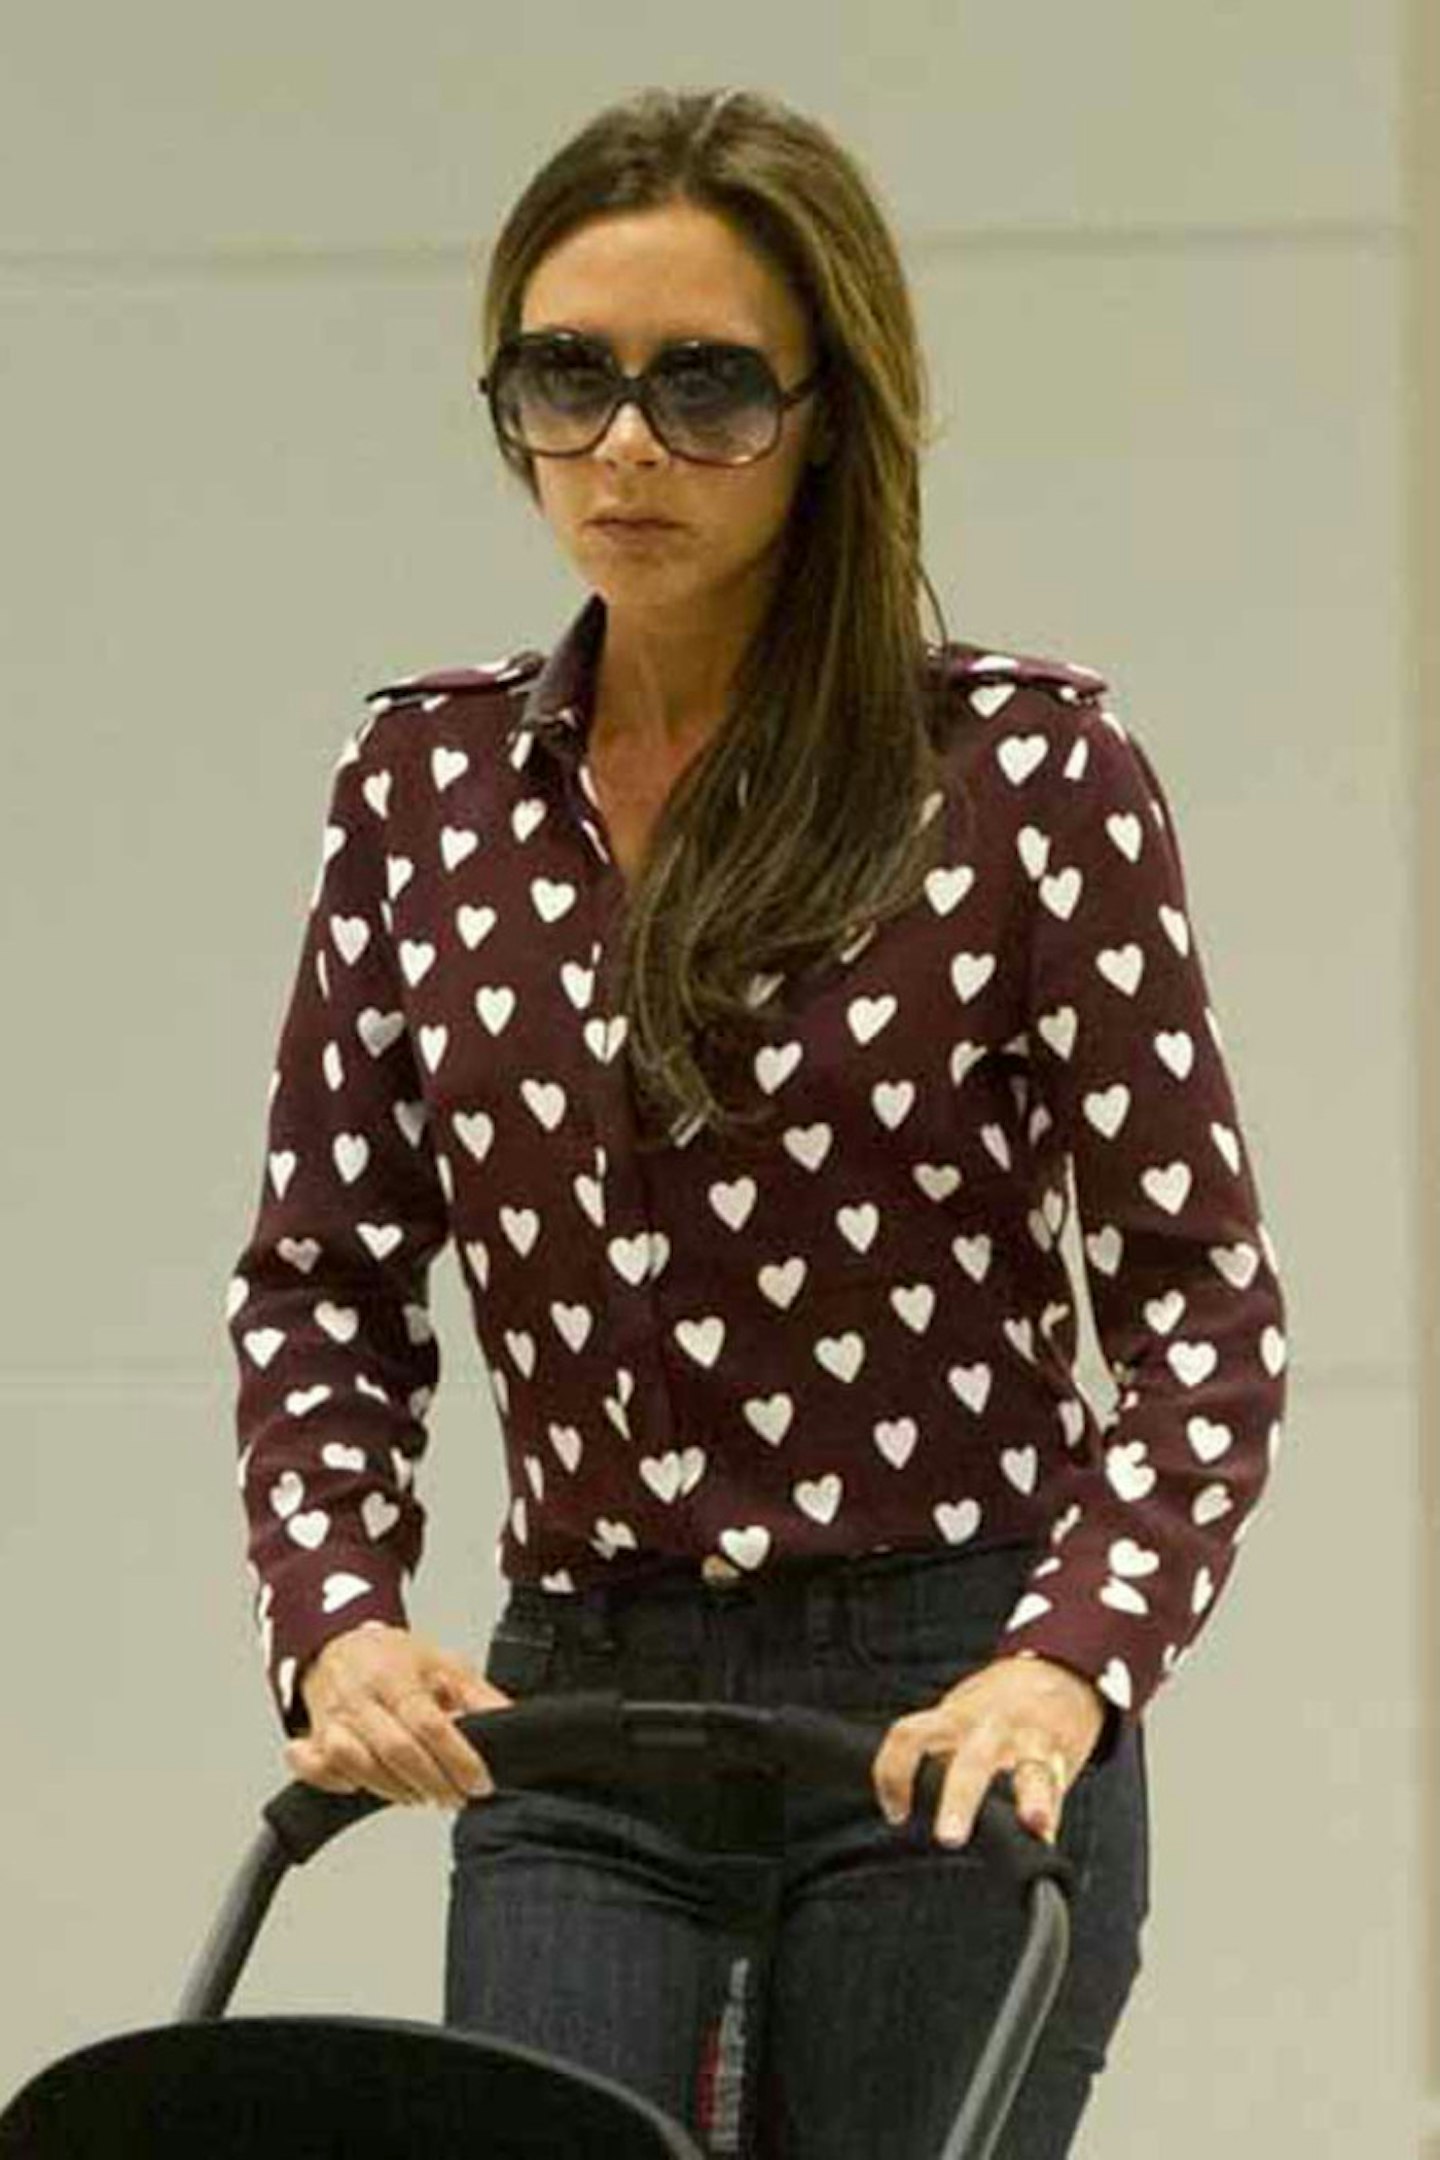 Victoria Beckham style burberry heart shirt new york fashion week